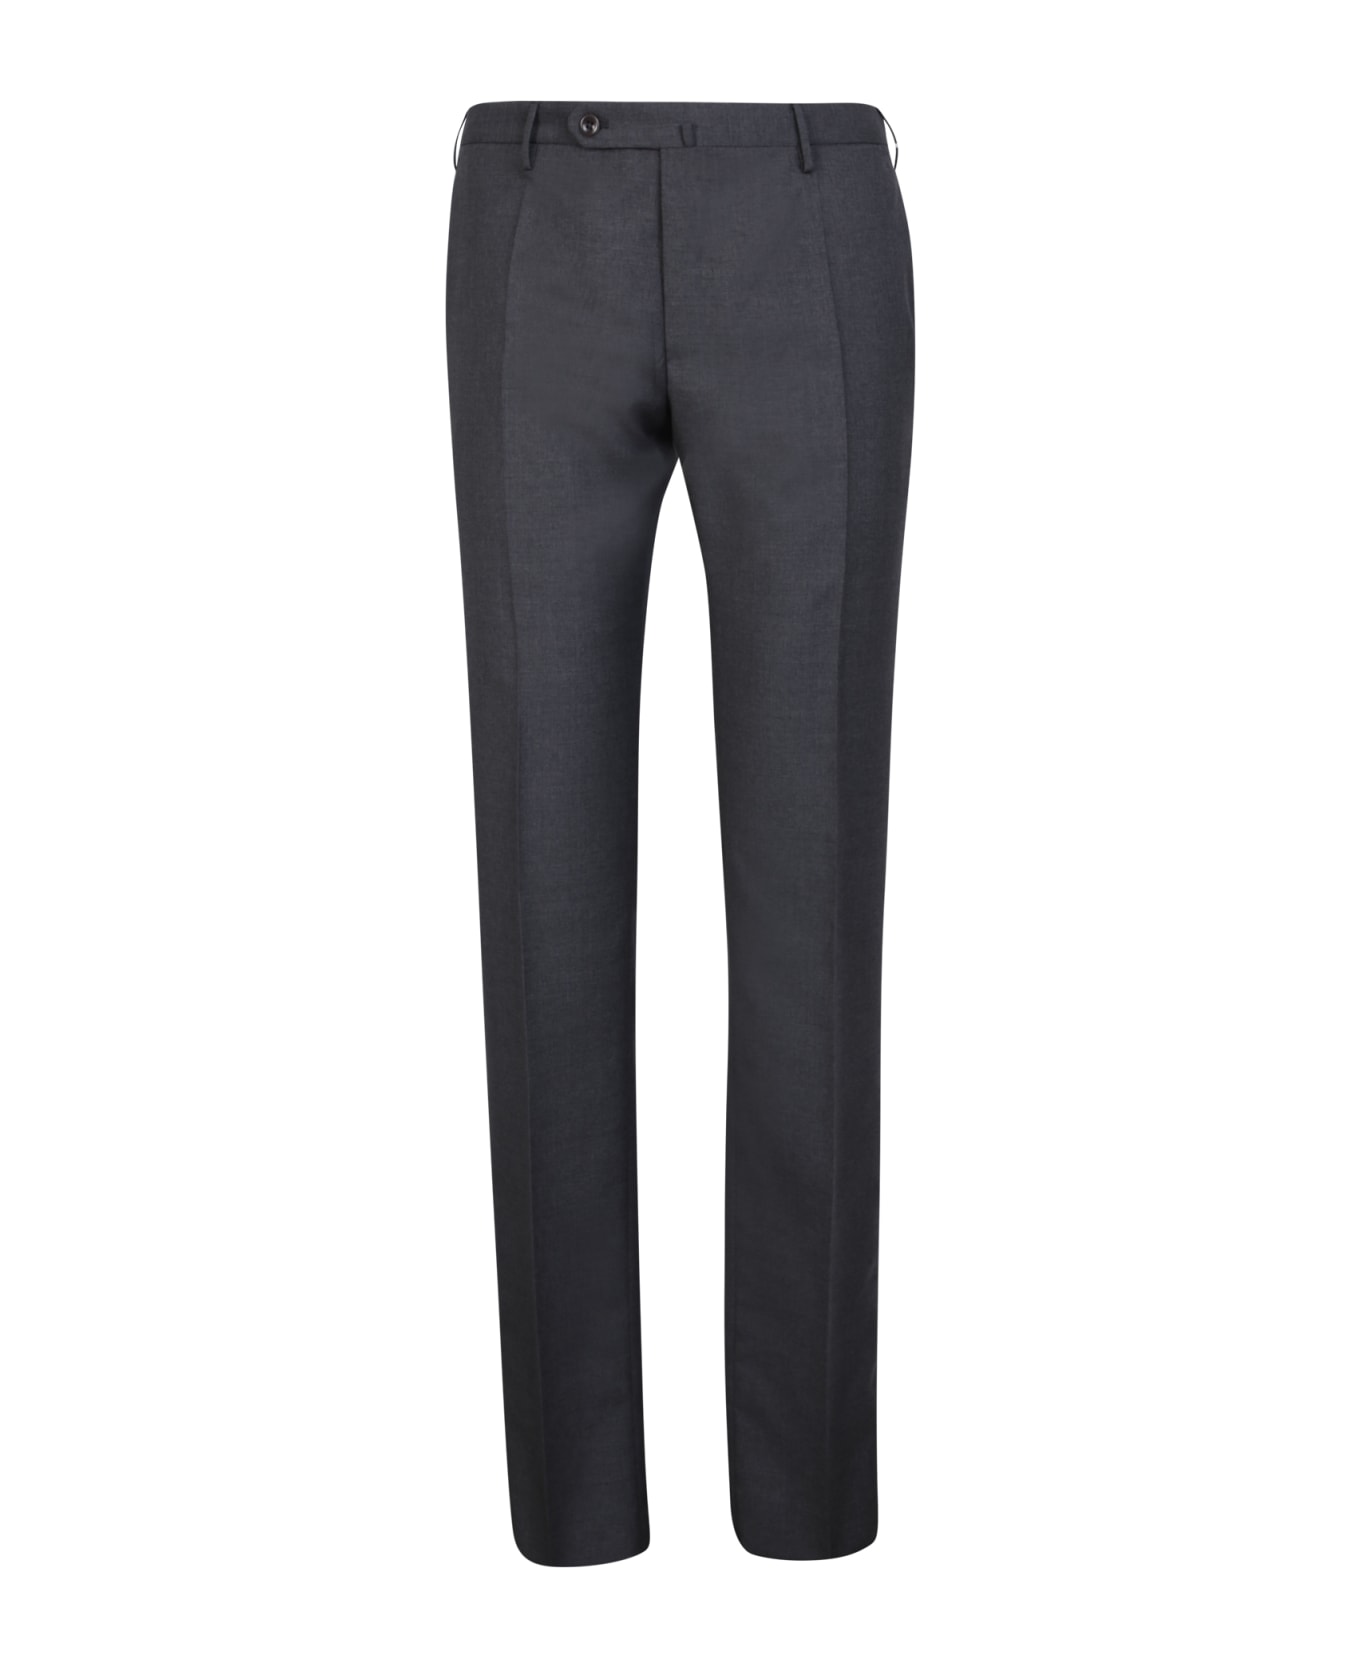 Incotex Grey Slim Fit Trousers - Grey ボトムス